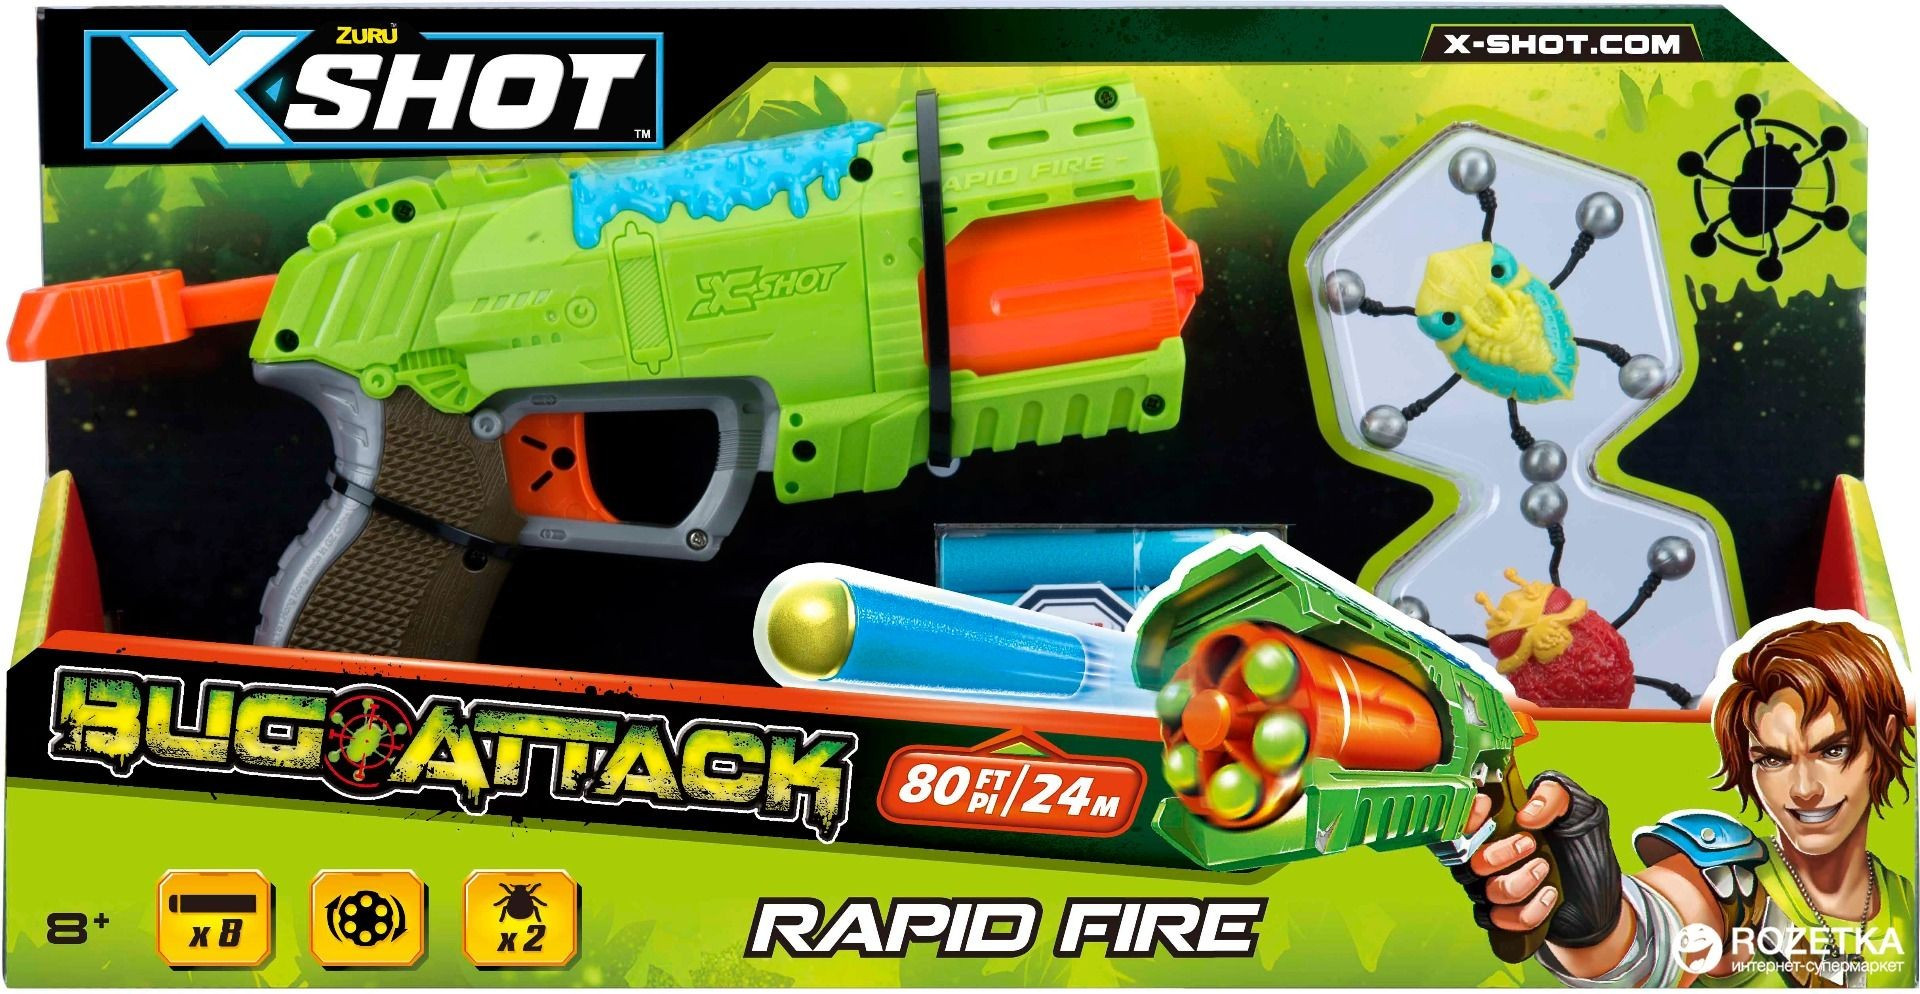 Pistol X-Shot Bugs Attack Blaster Noriel Cu Tragere Rapida